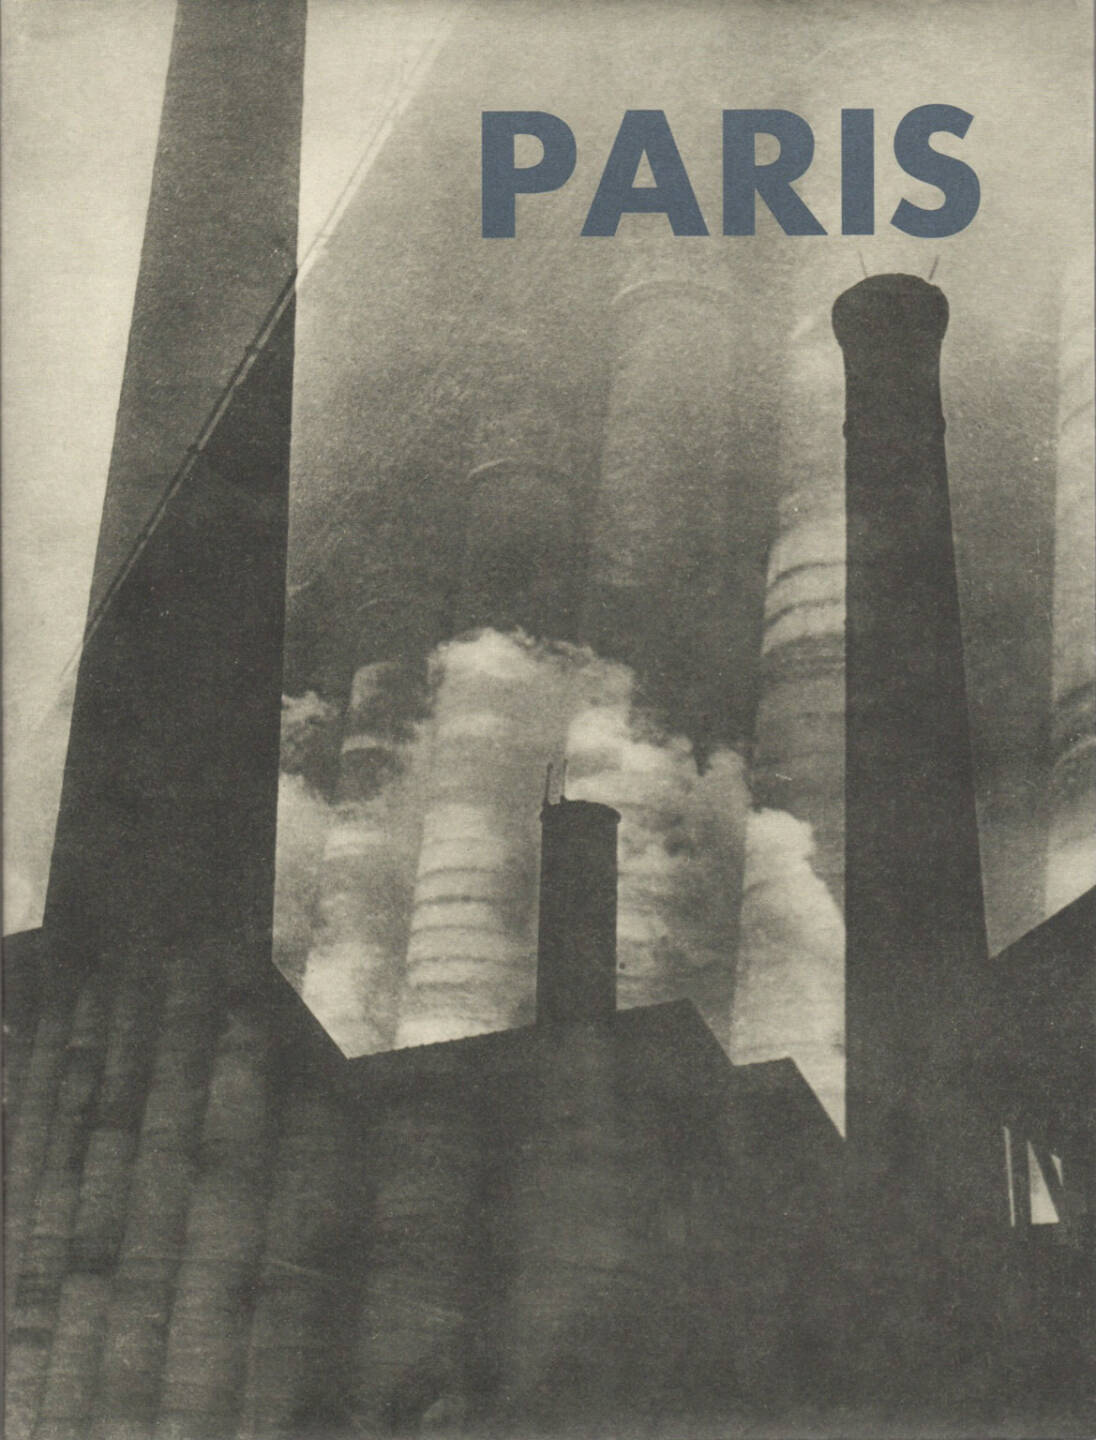 Moi Ver - Paris, Editions Jeanne Walter/7L 1931/2002, Cover - http://josefchladek.com/book/moi_ver_-_paris